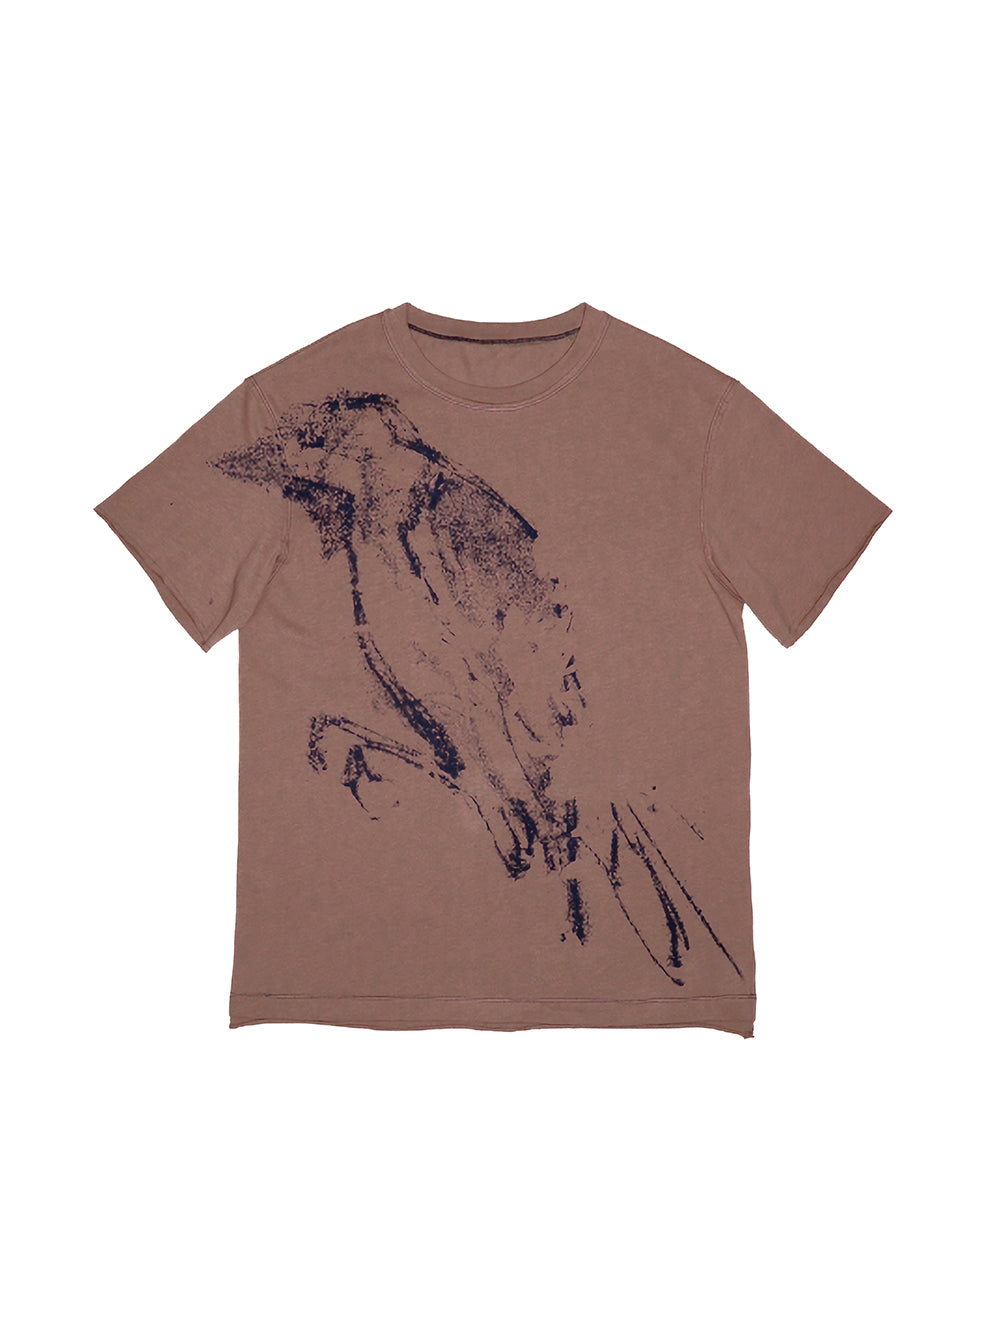 MUKTANK X COOLOTHES Smeared Bird Bean Paste Smeared Bird Single Print Brown Cotton T-Shirt